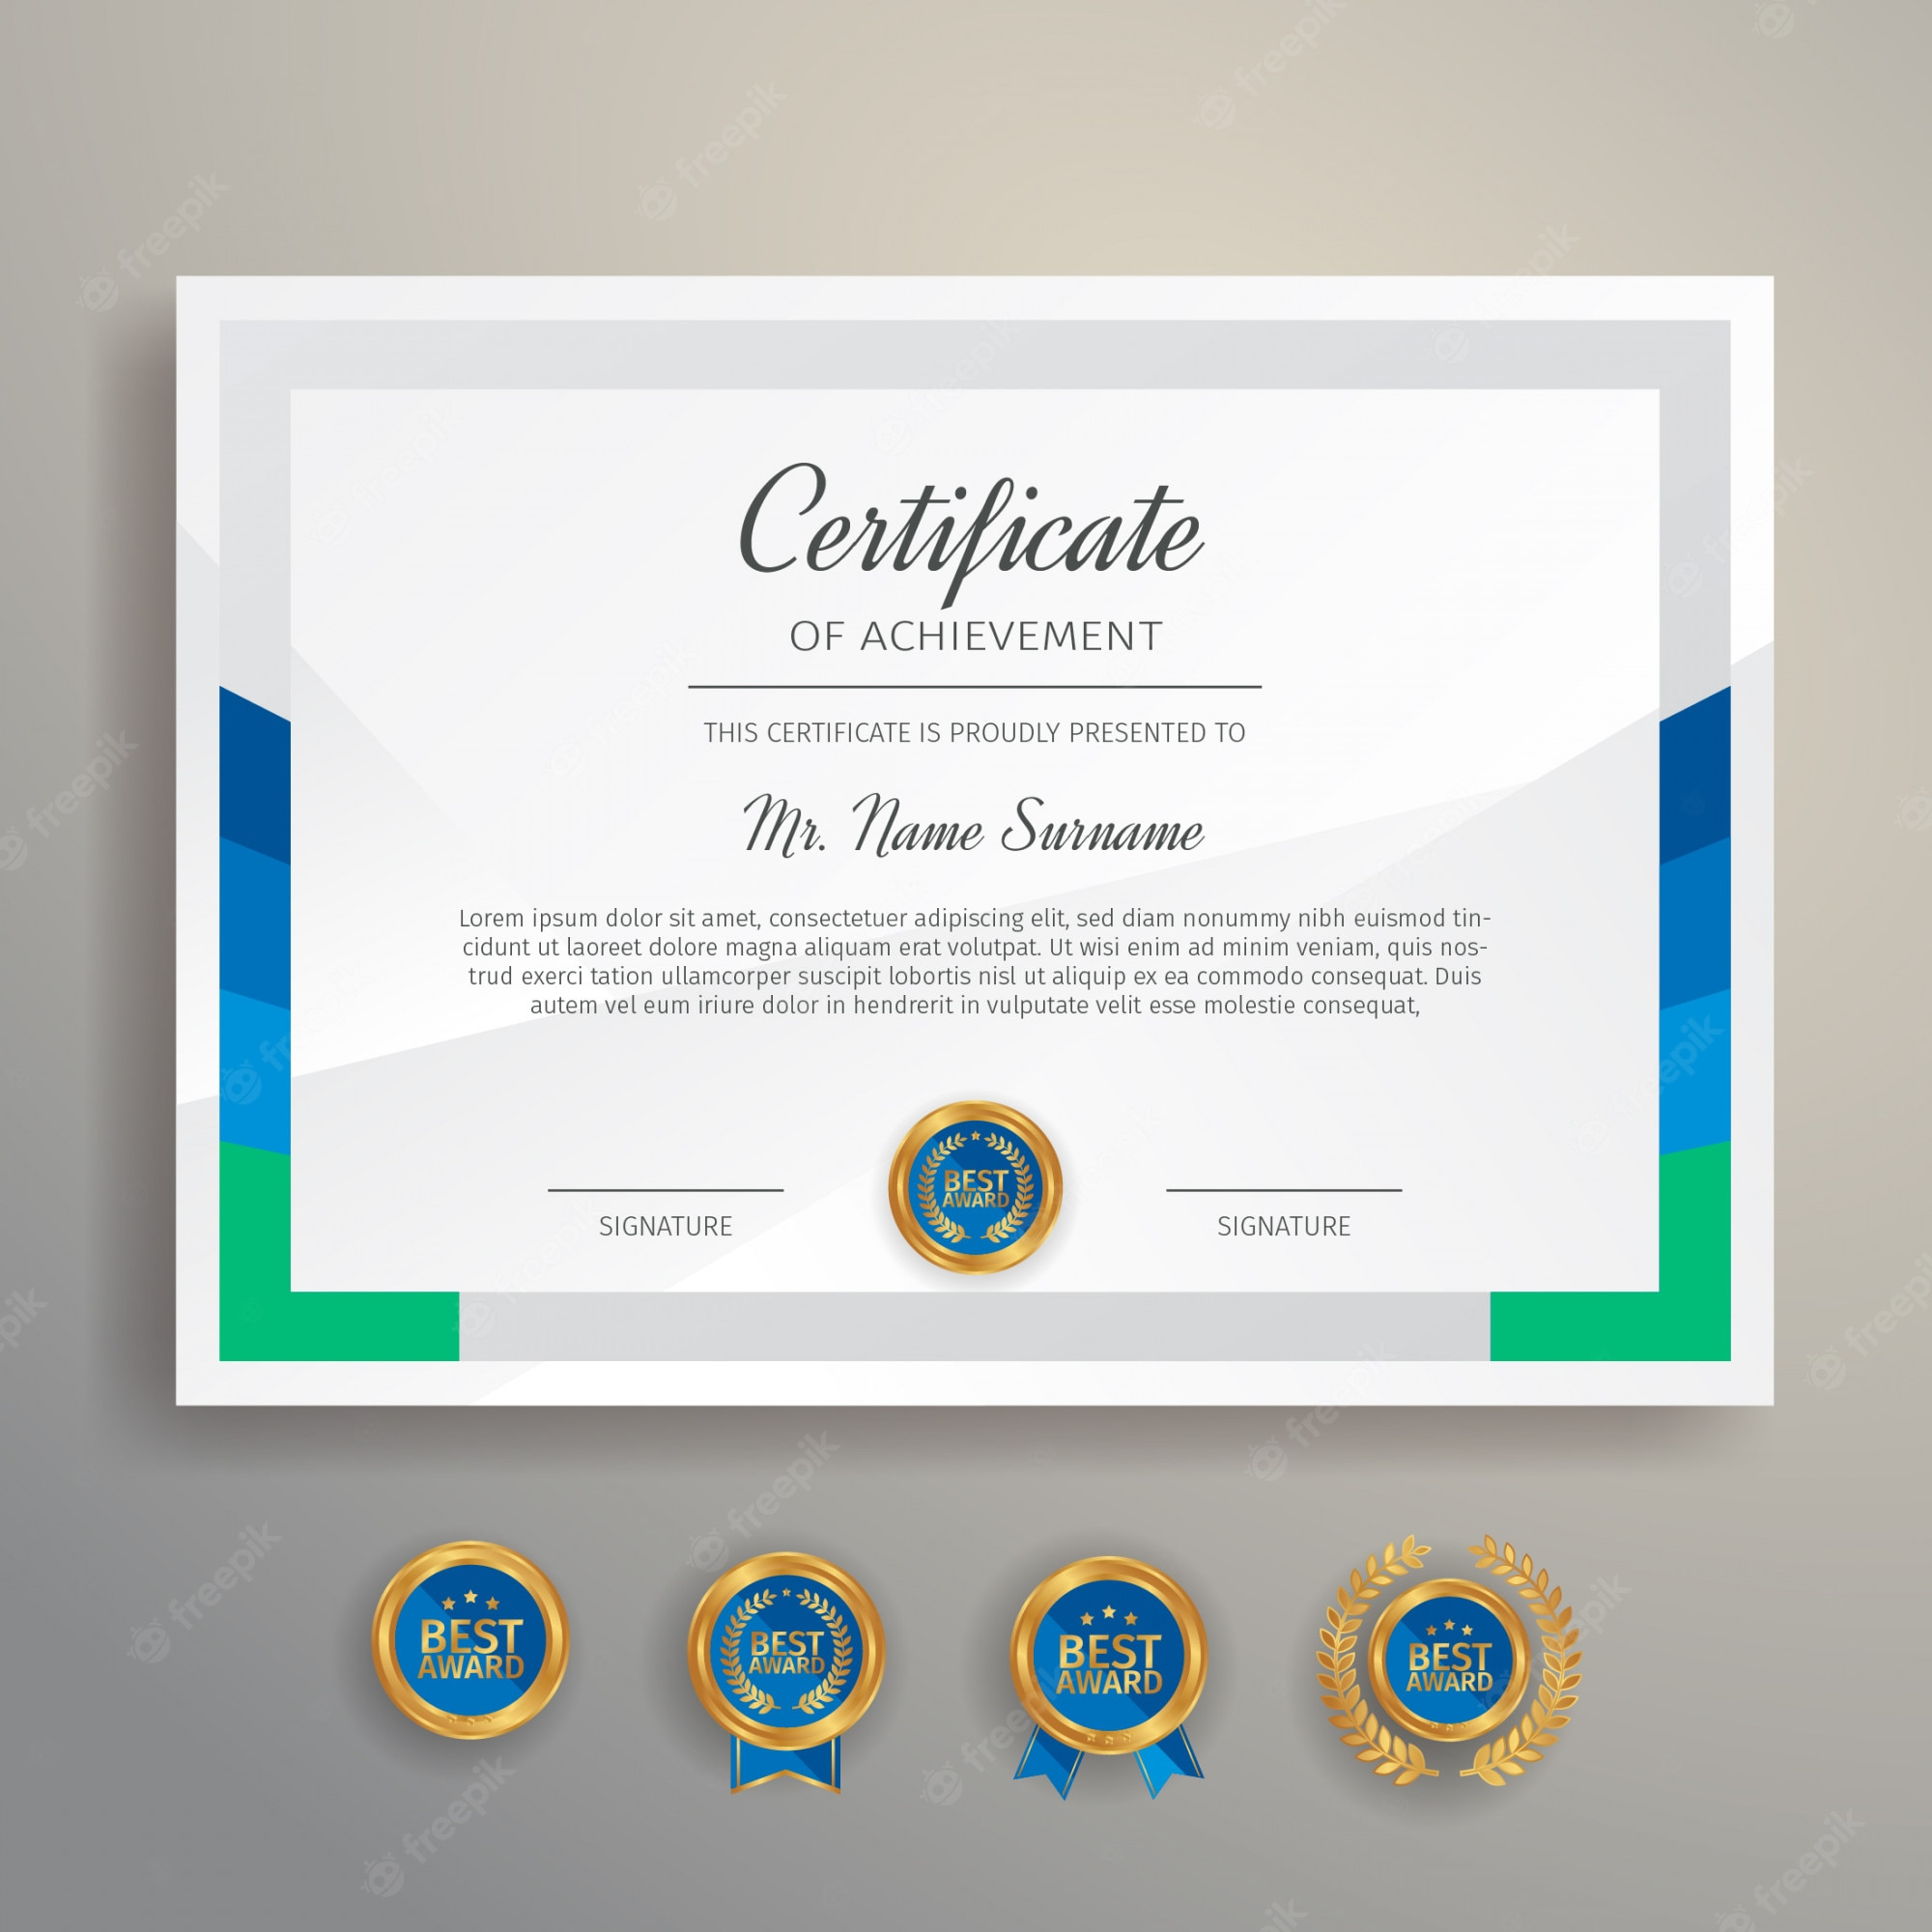 Education certificate Images  Free Vectors, Stock Photos & PSD Regarding Free School Certificate Templates